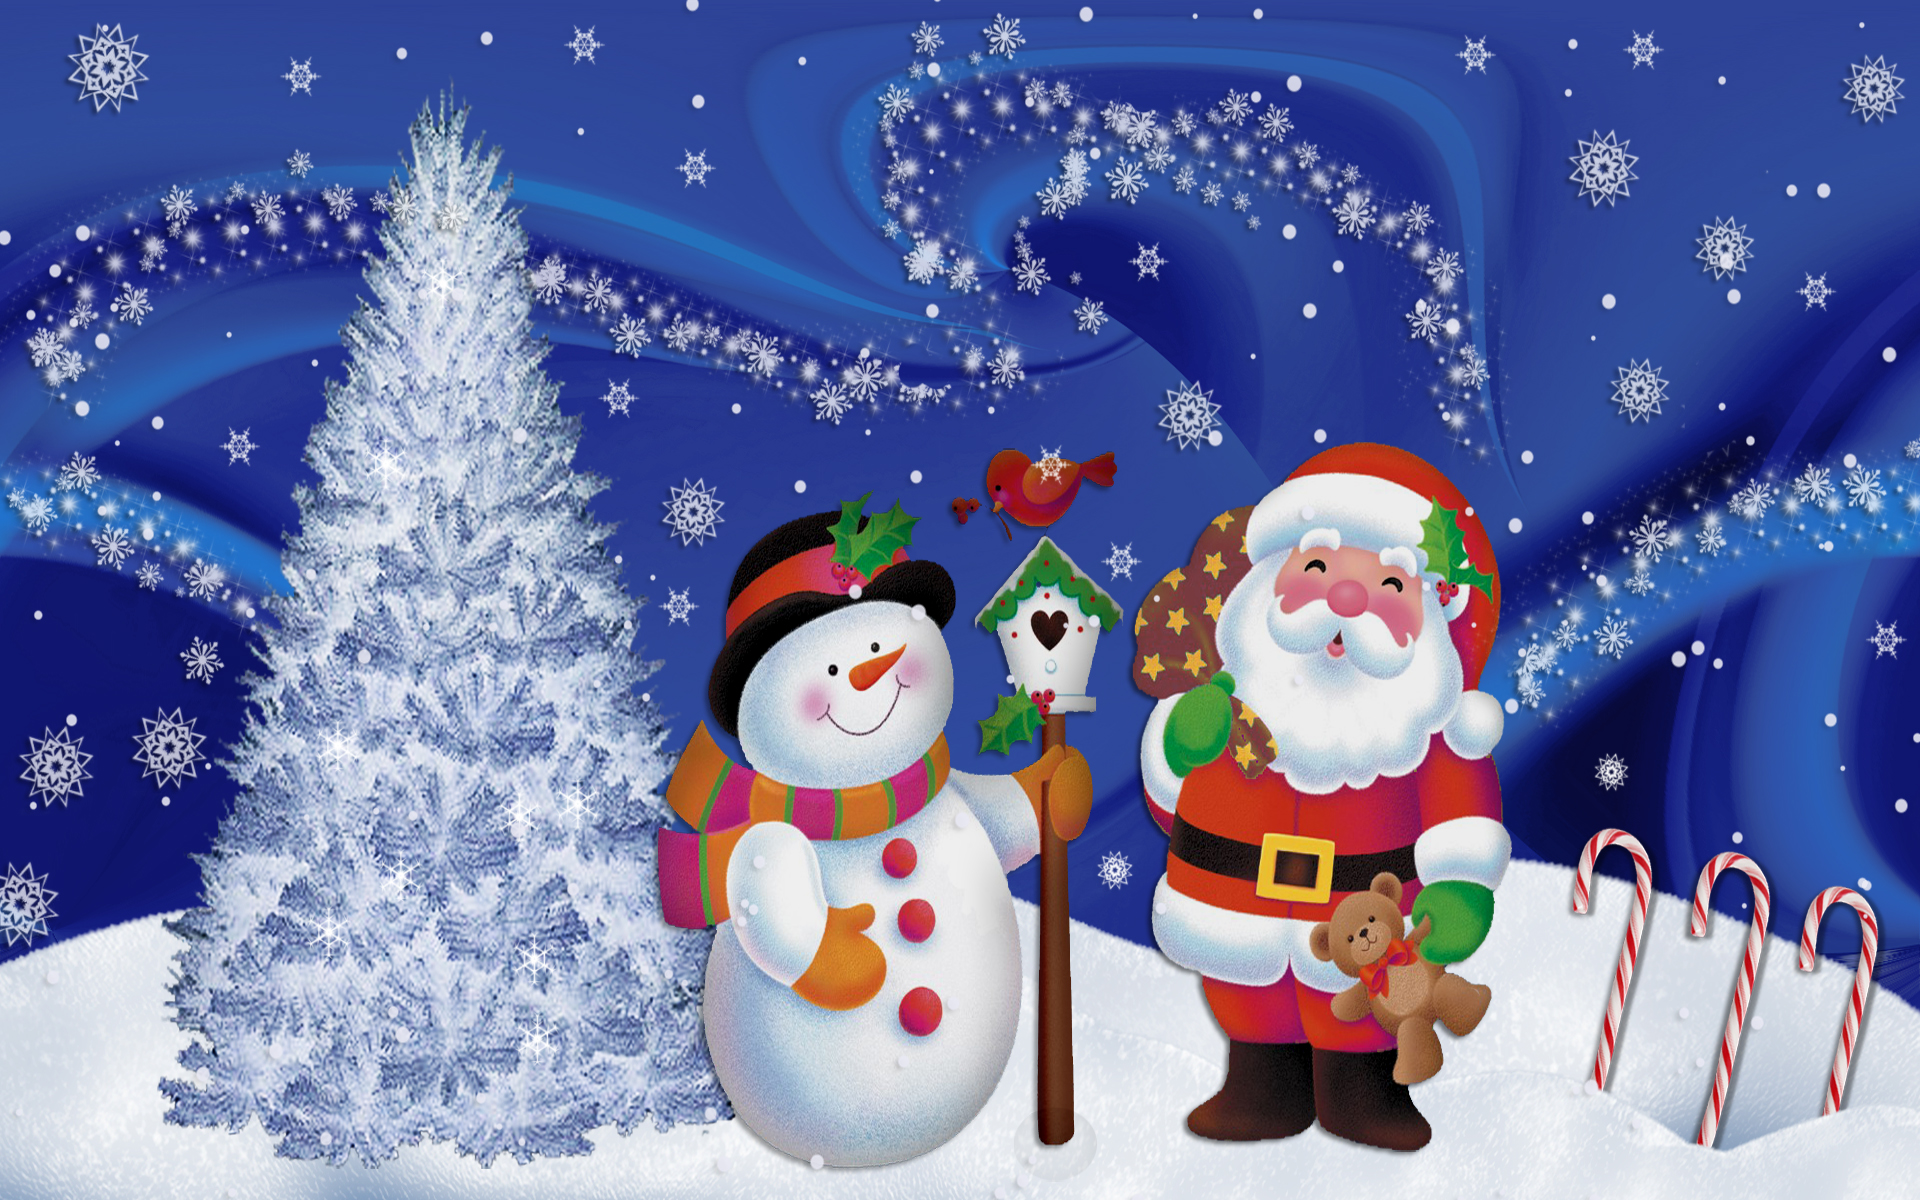 Merry Christmas   Christmas Wallpaper  32789995    Fanpop